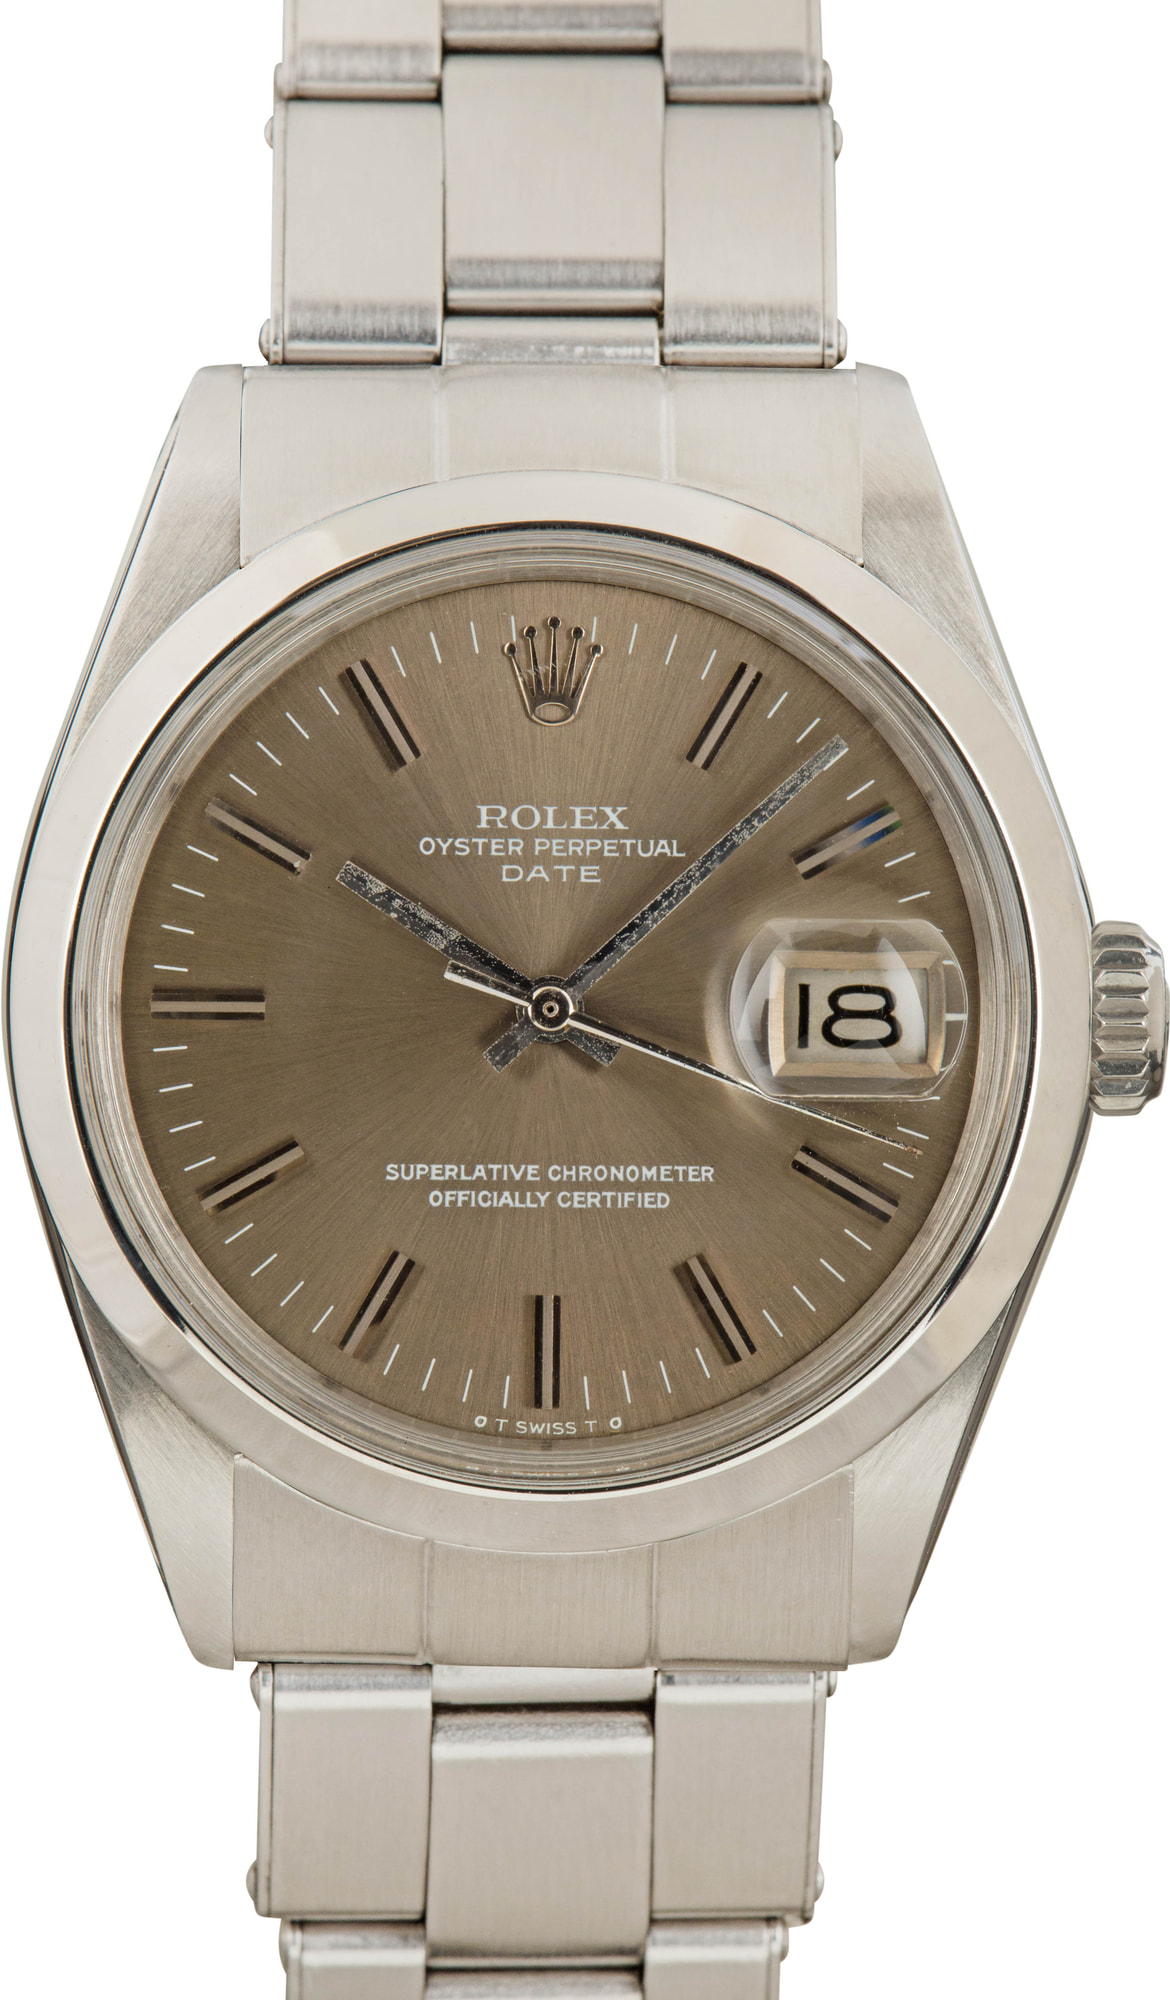 Rolex Date - BobsWatches.com